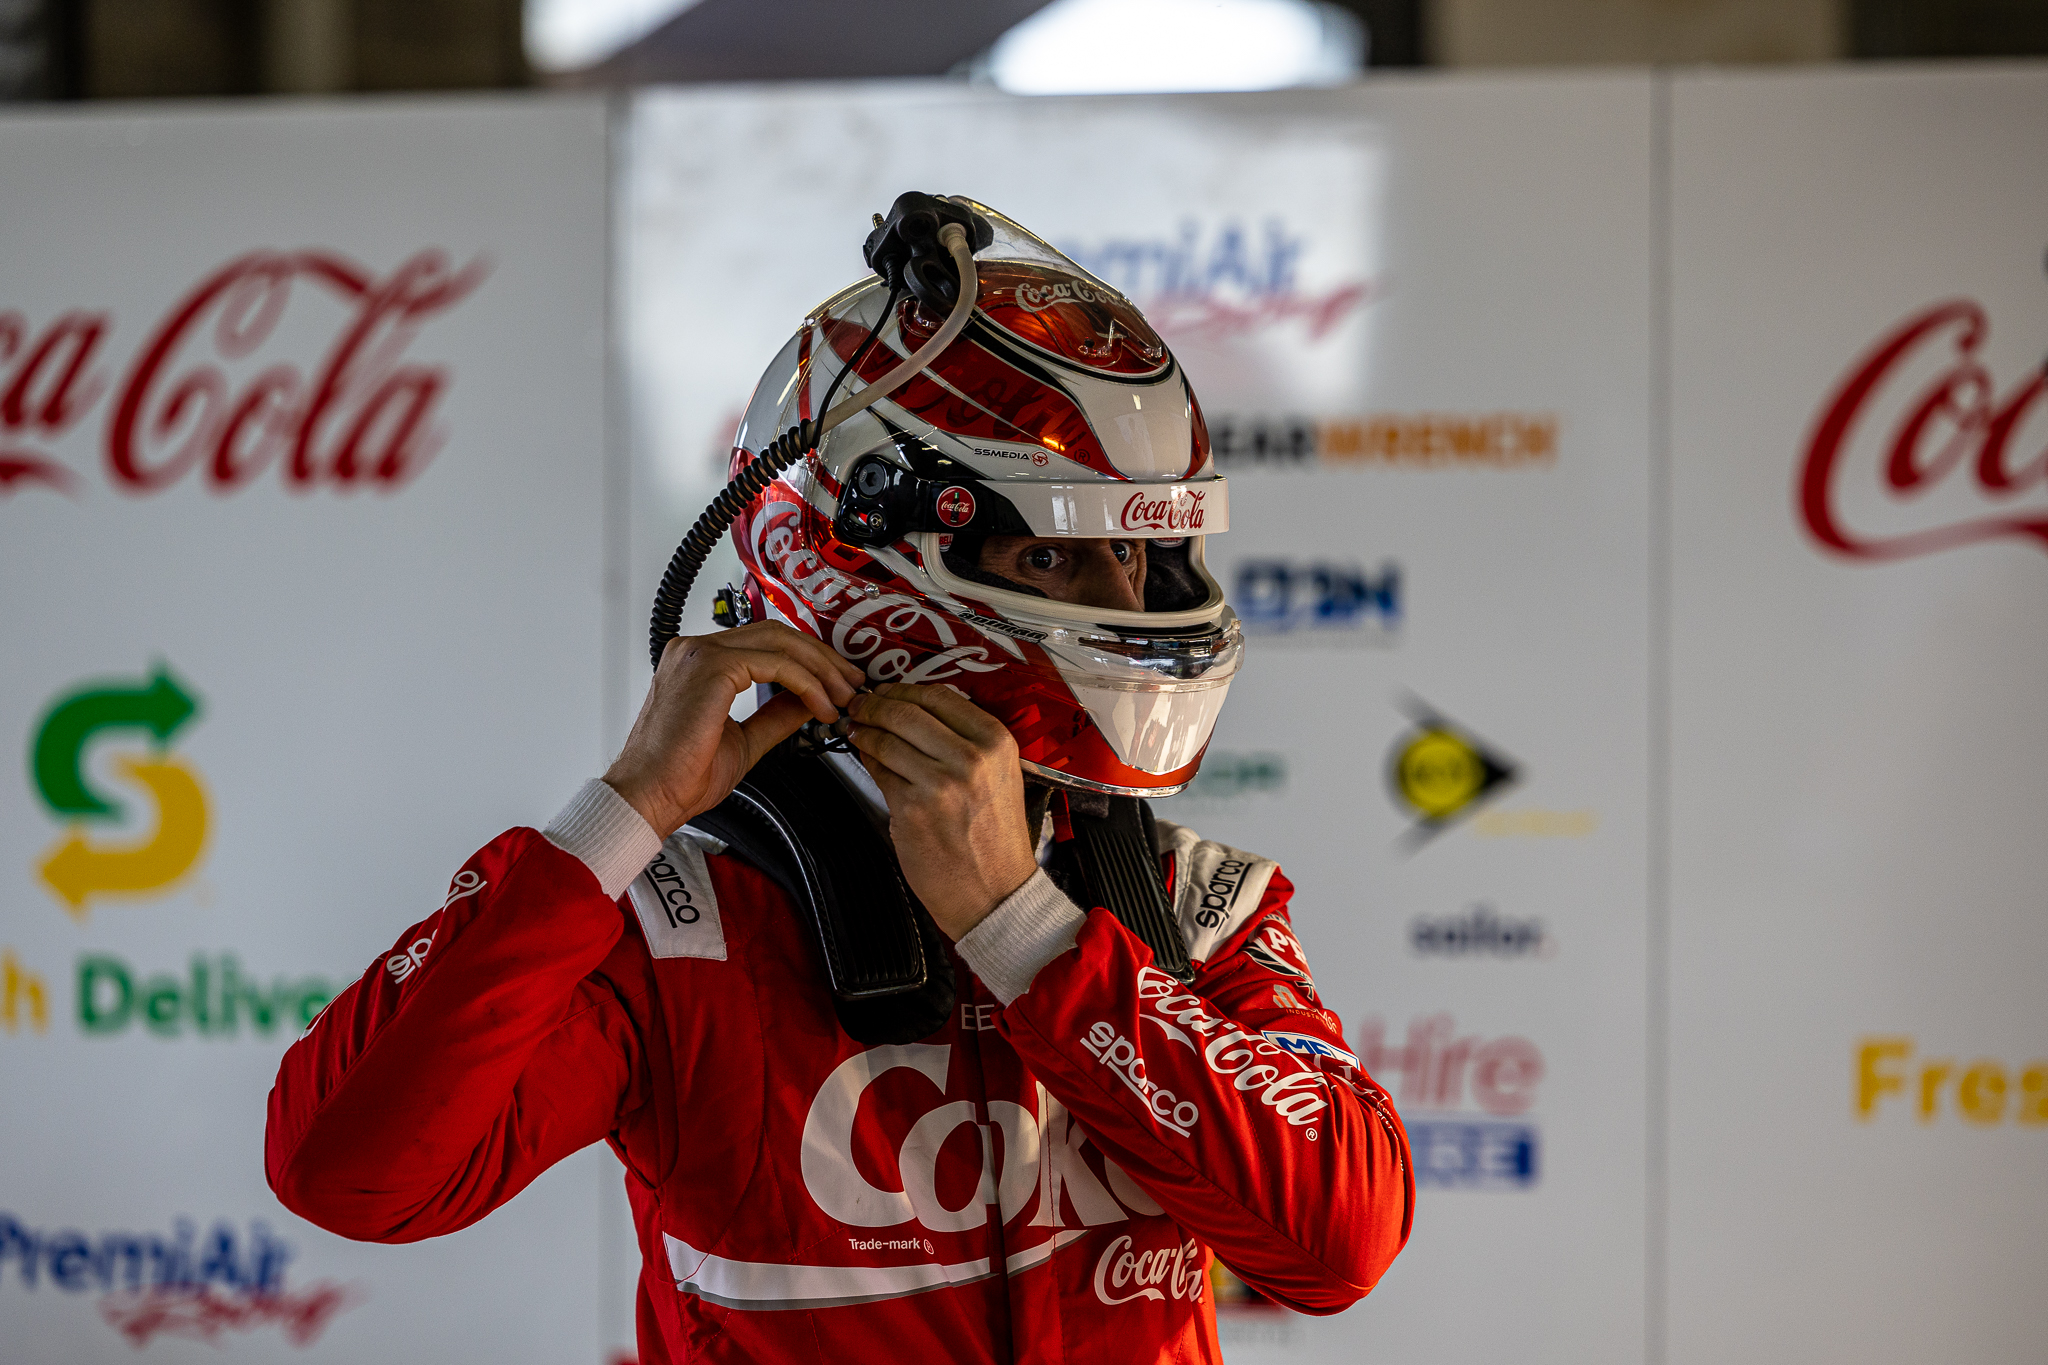 Sydney SuperNight Recap: PremiAir Coca-Cola Racing